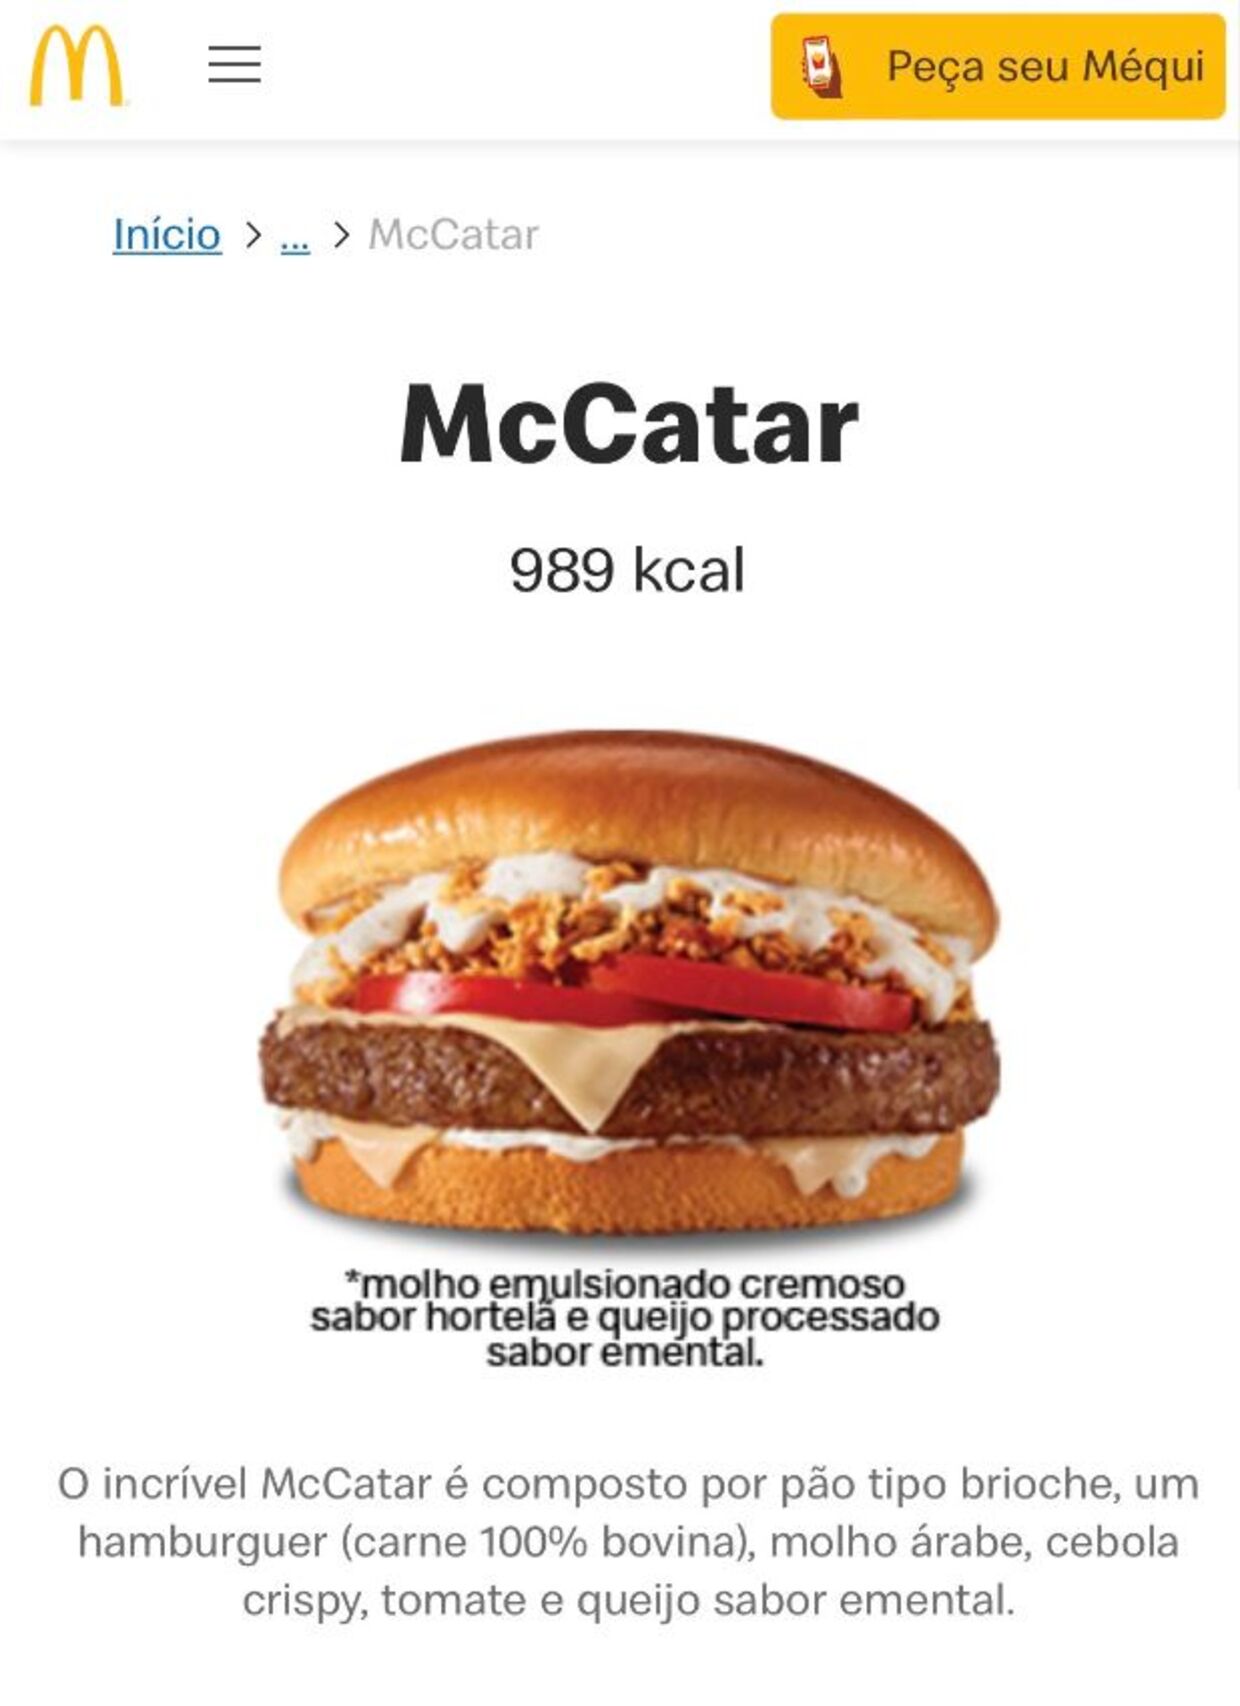 Sådan ser den nye Qatar-burger ud.